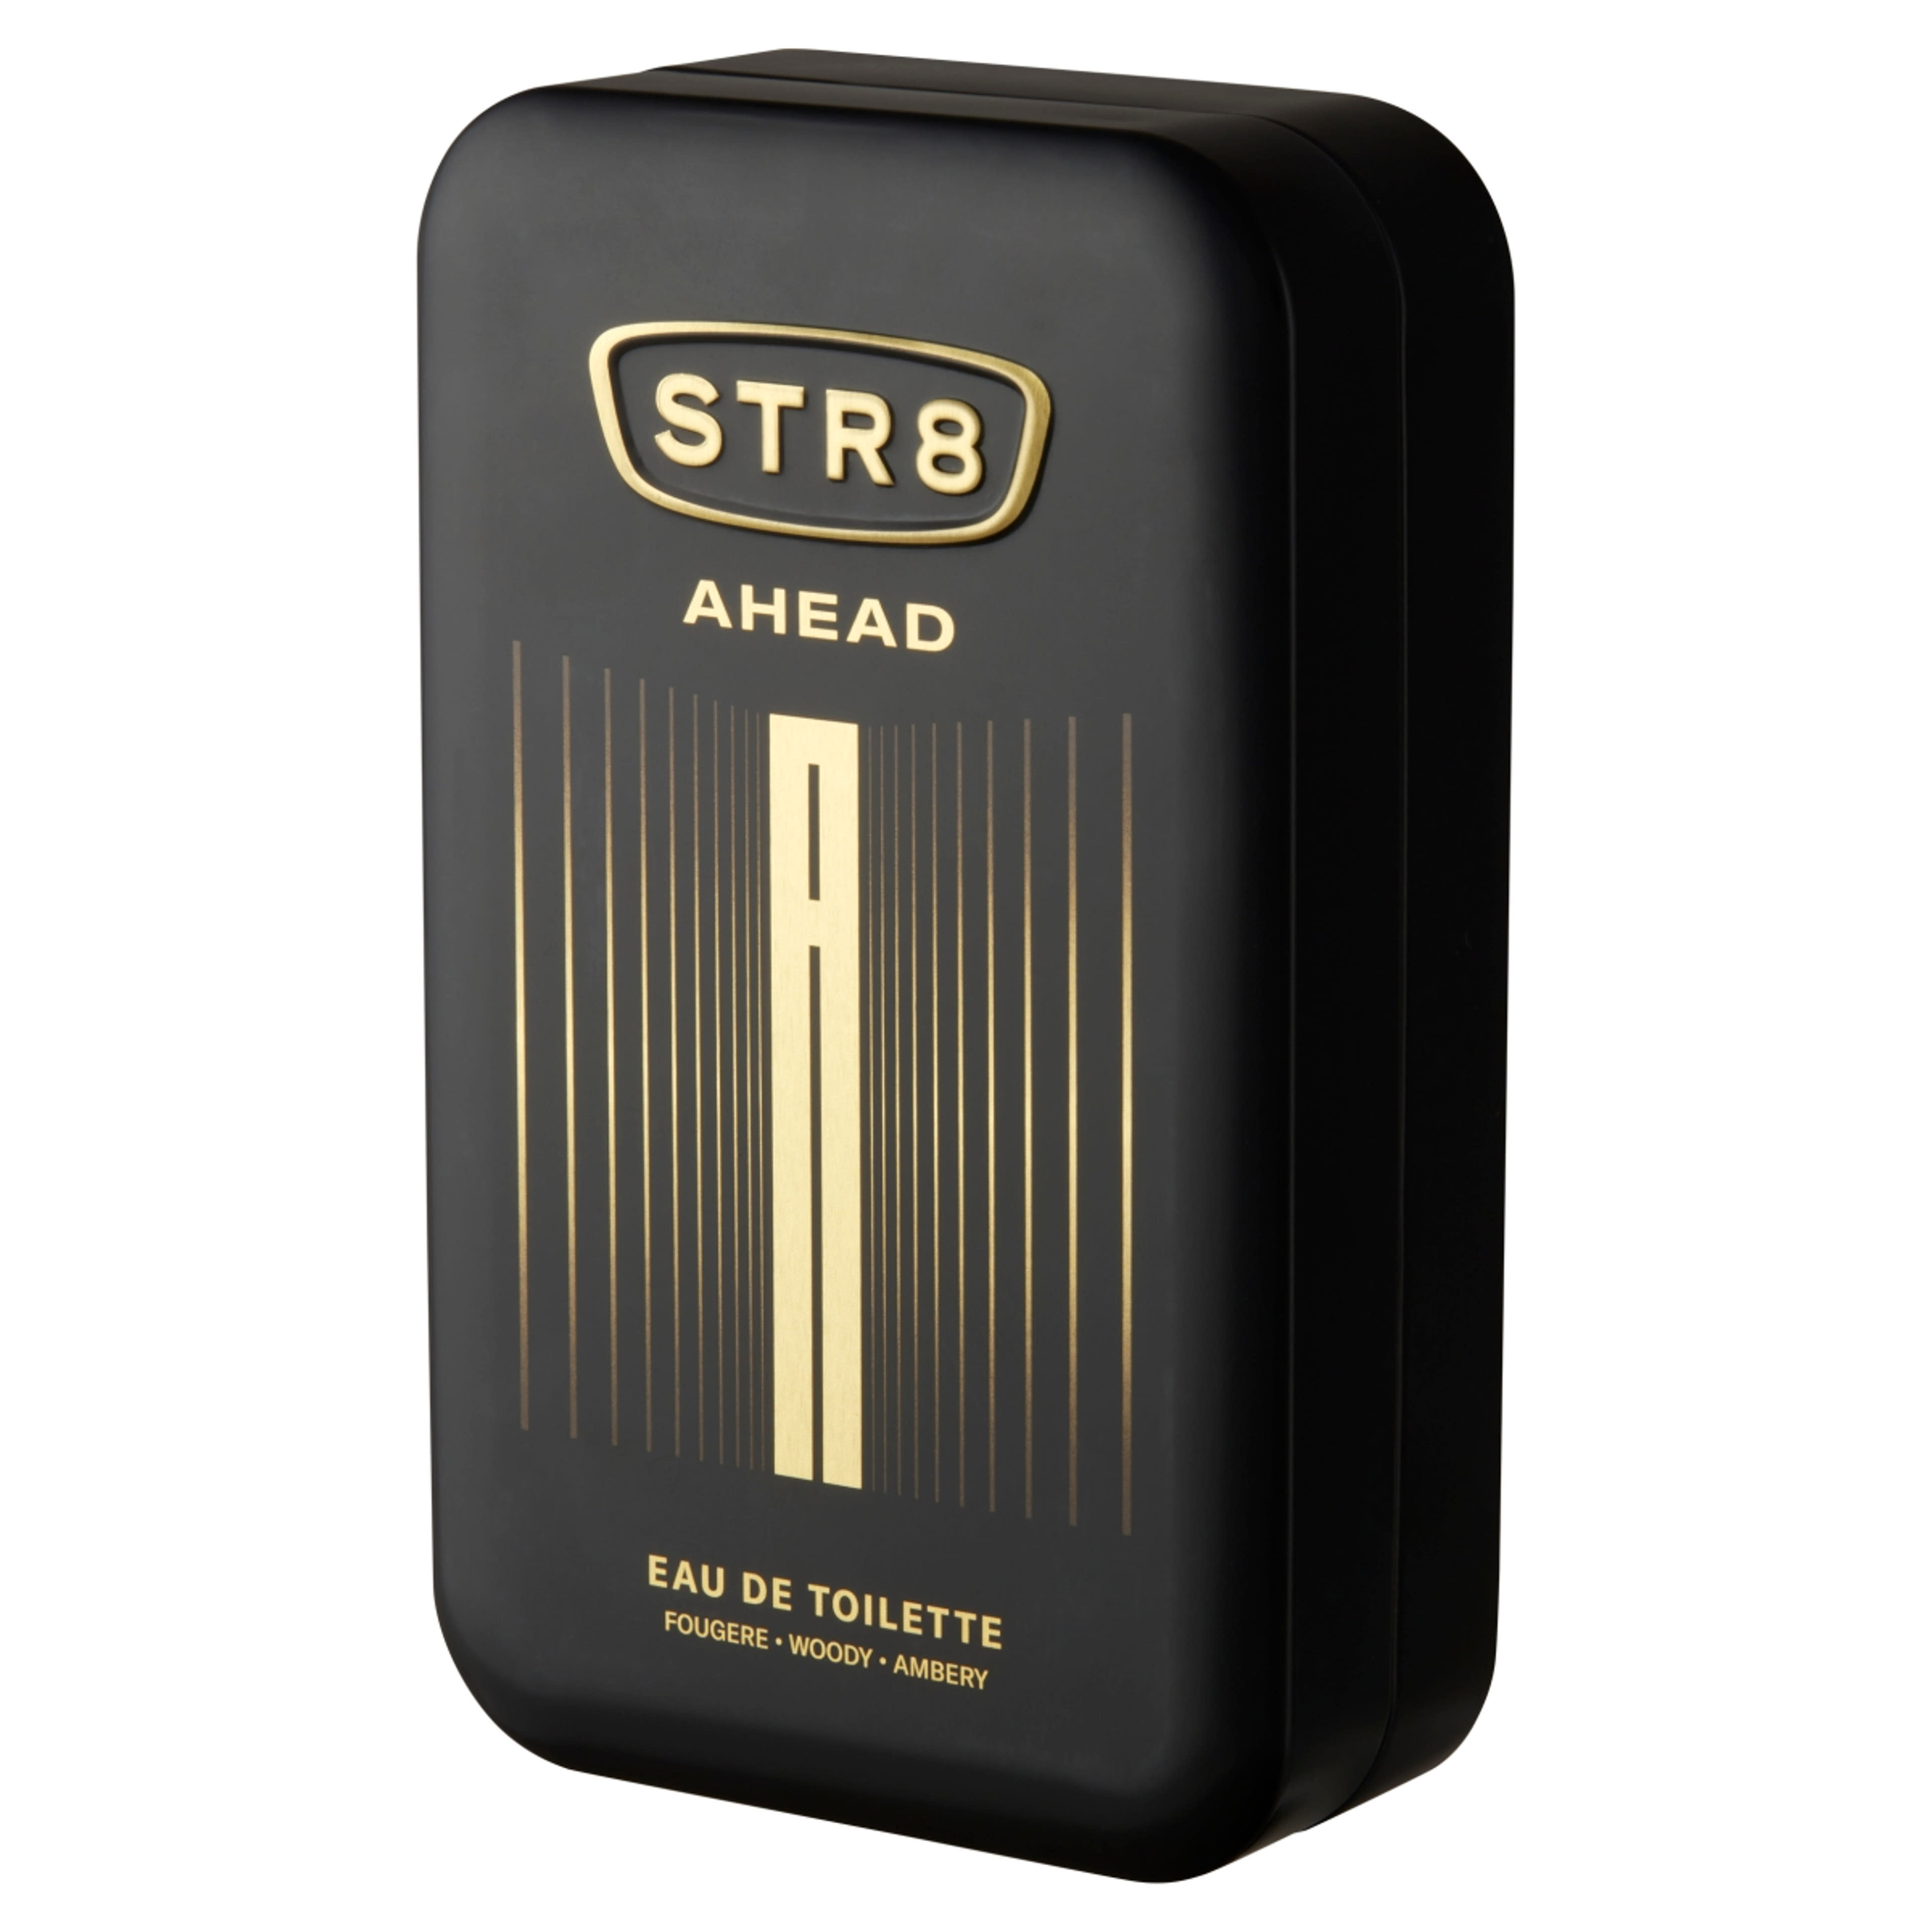 STR8 Ahead eau de toilette - 100 ml-2